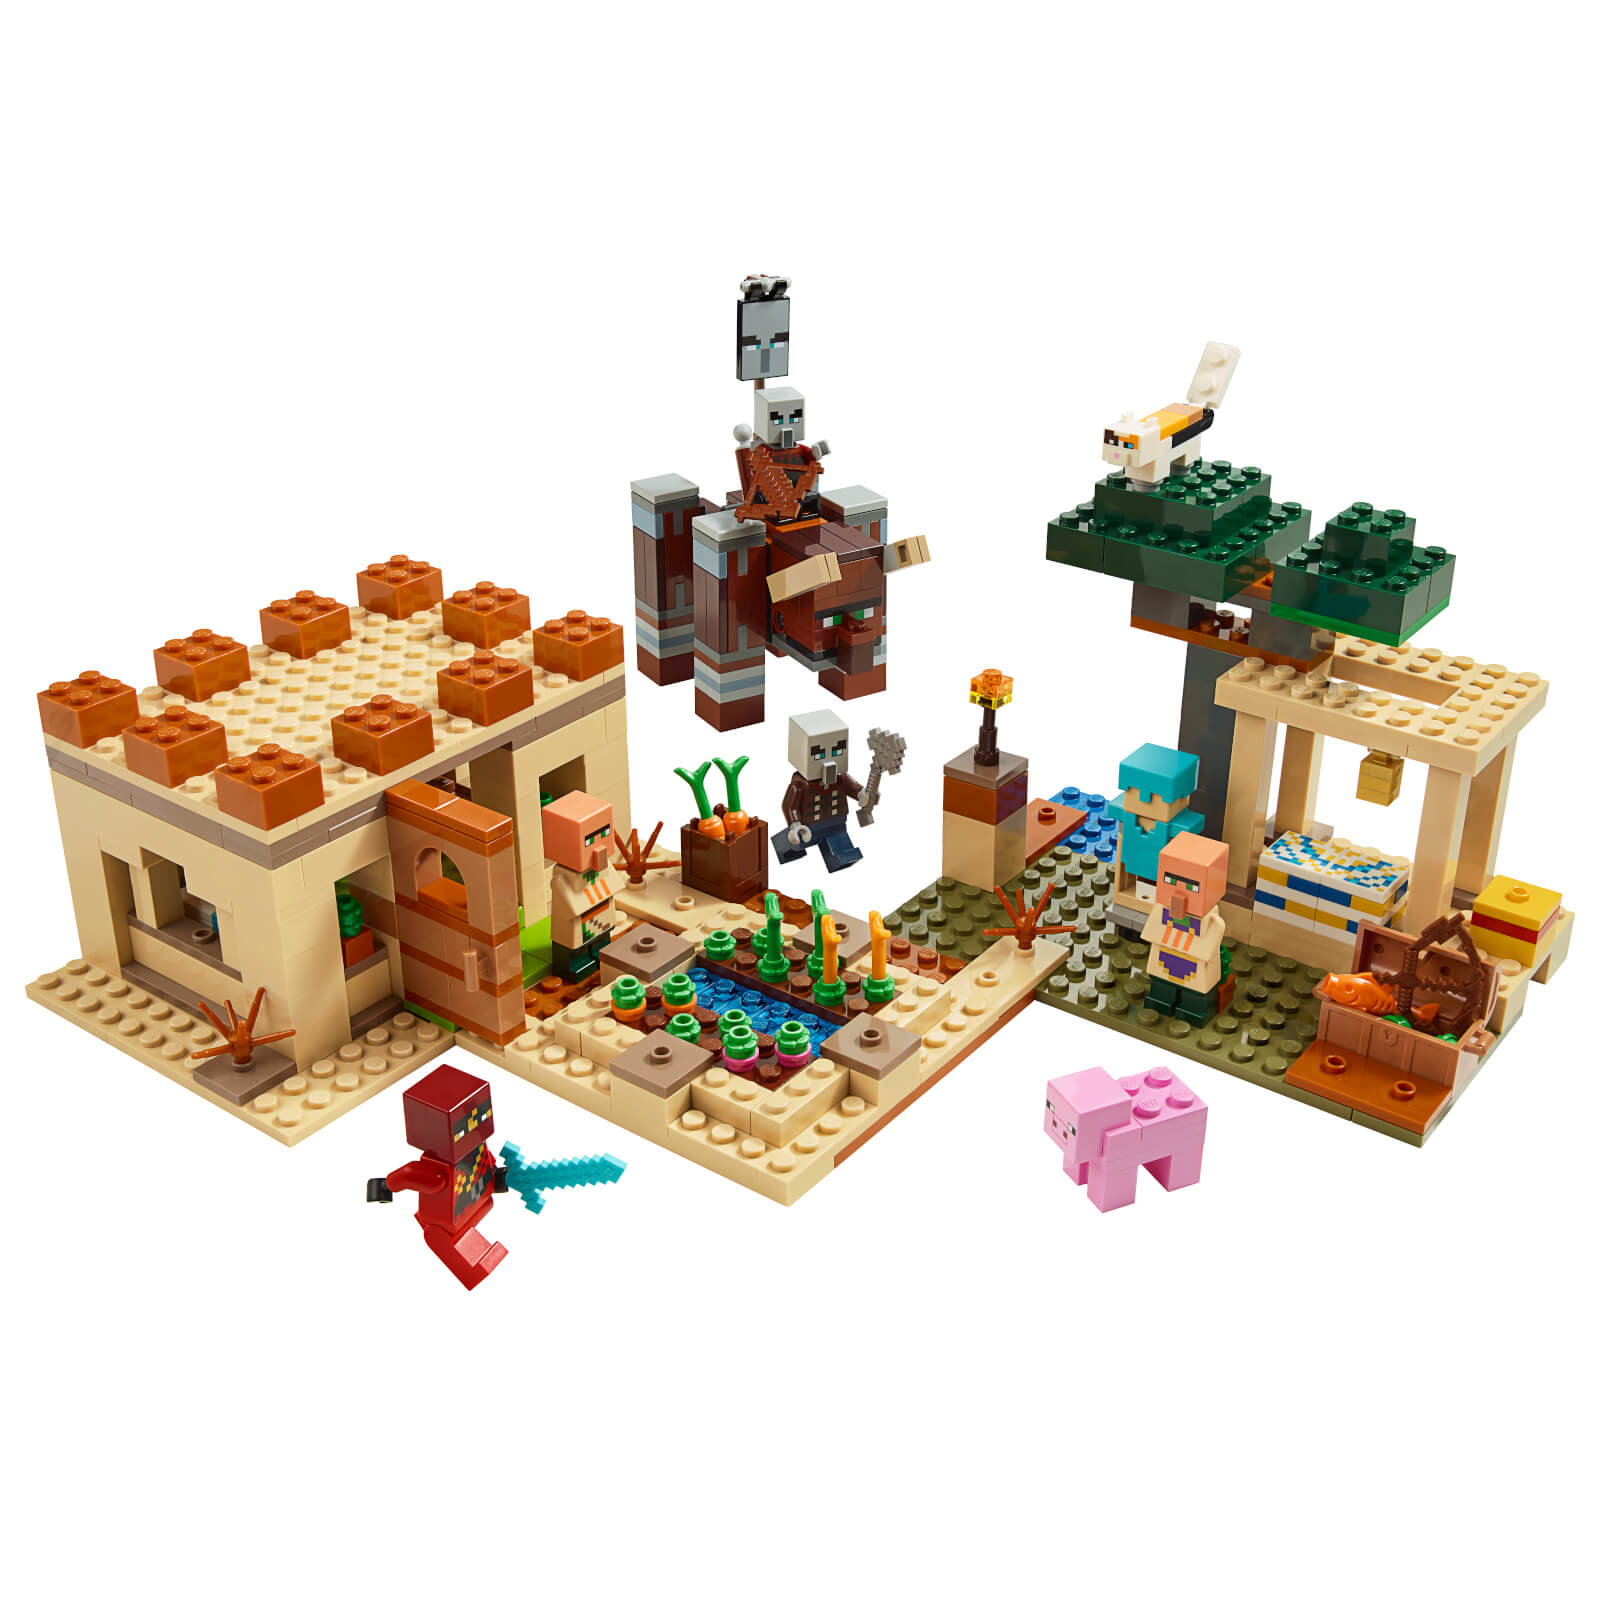 LEGO Minecraft: The Villager Raid Building Set (21160)